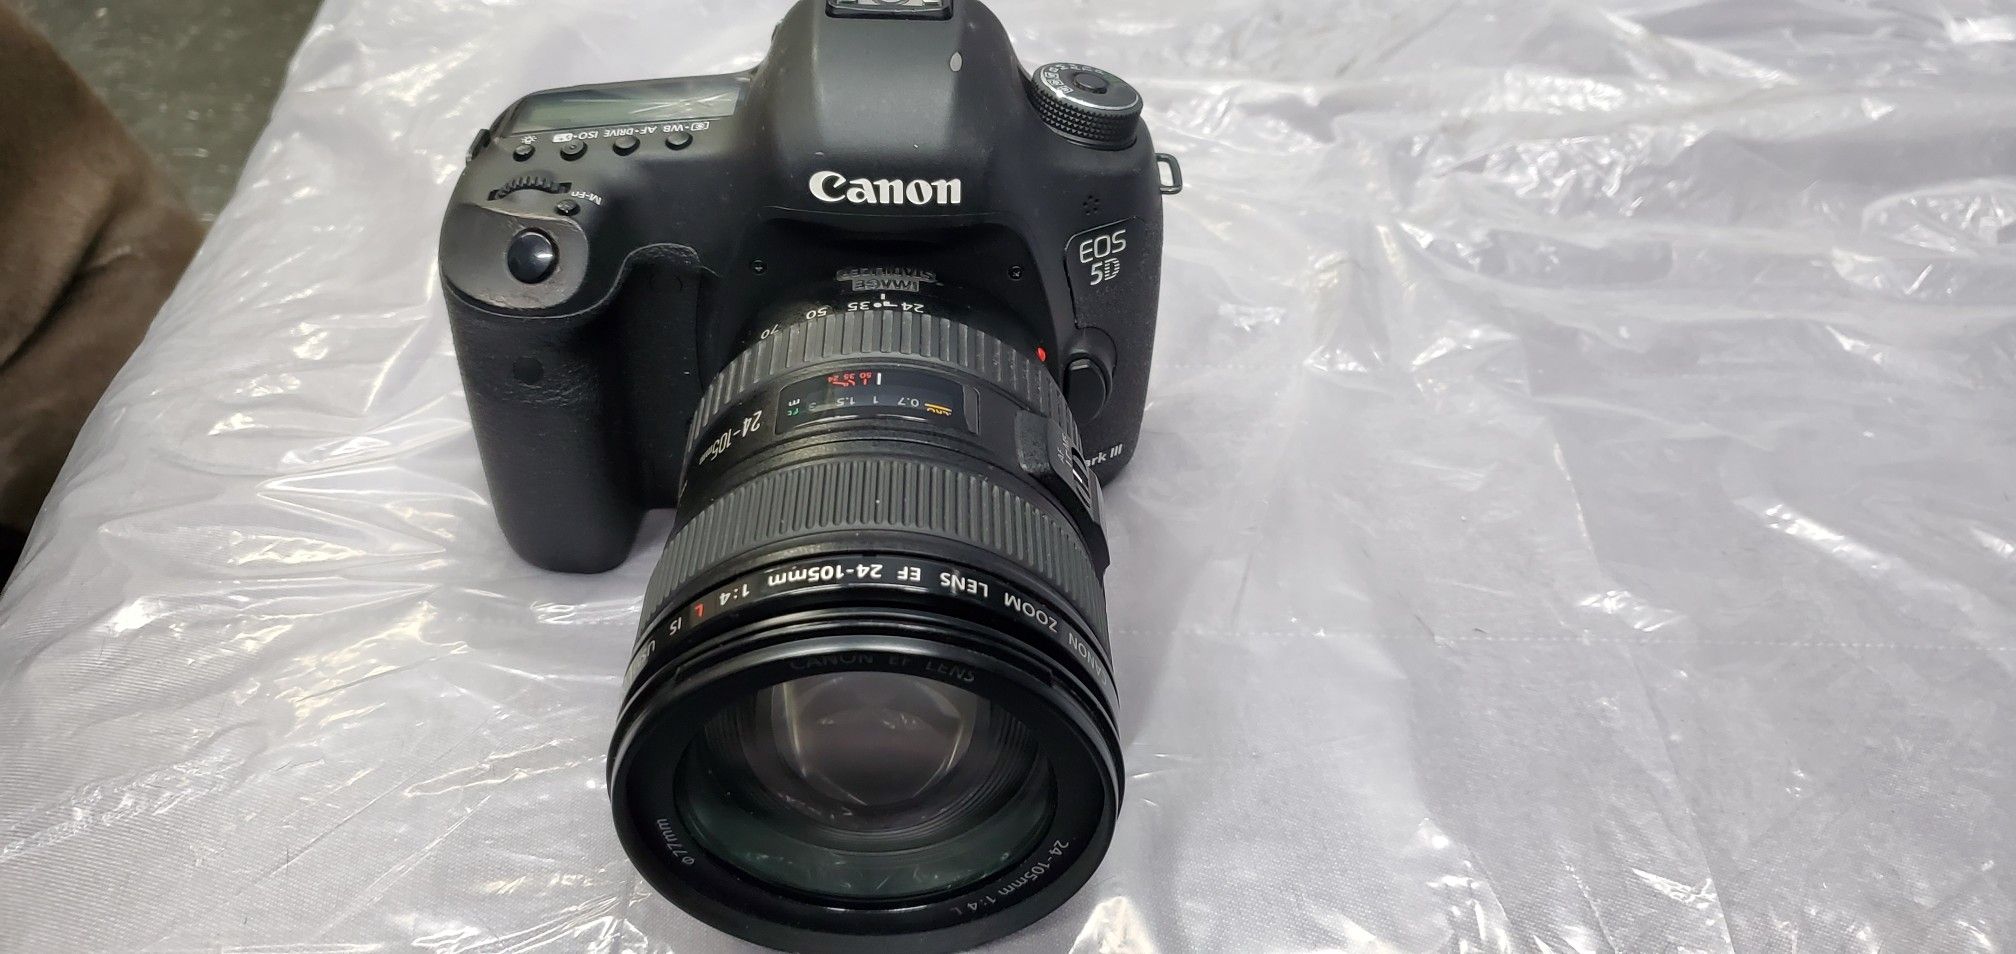 Canon 5d mark iii with lens 24-105